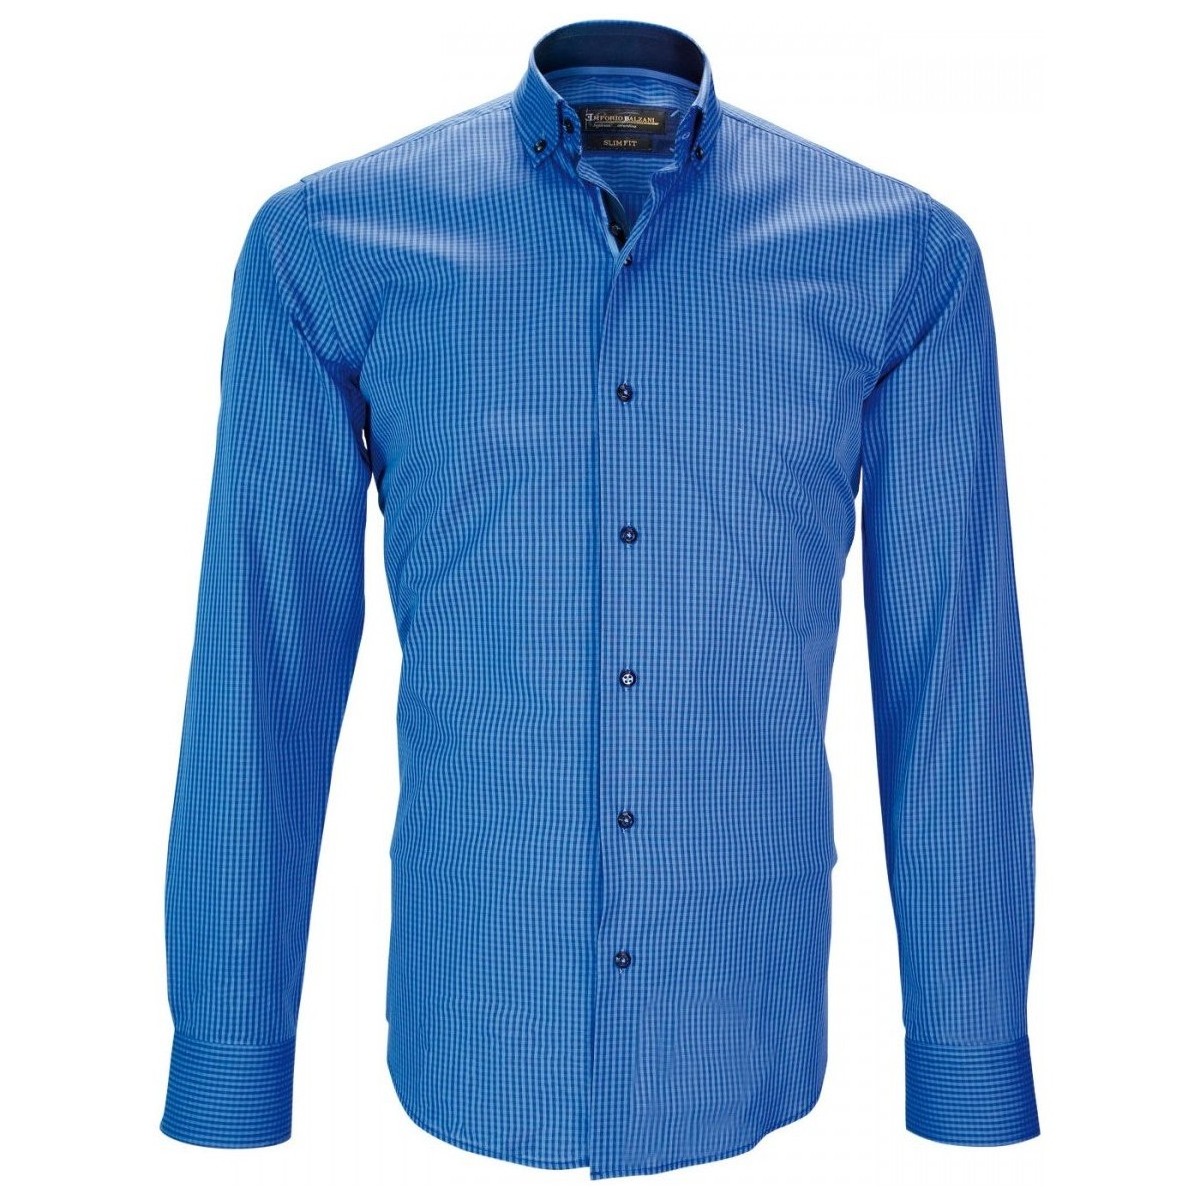 Vêtements Homme Chemises manches longues Emporio Balzani chemise casual arezo bleu Bleu